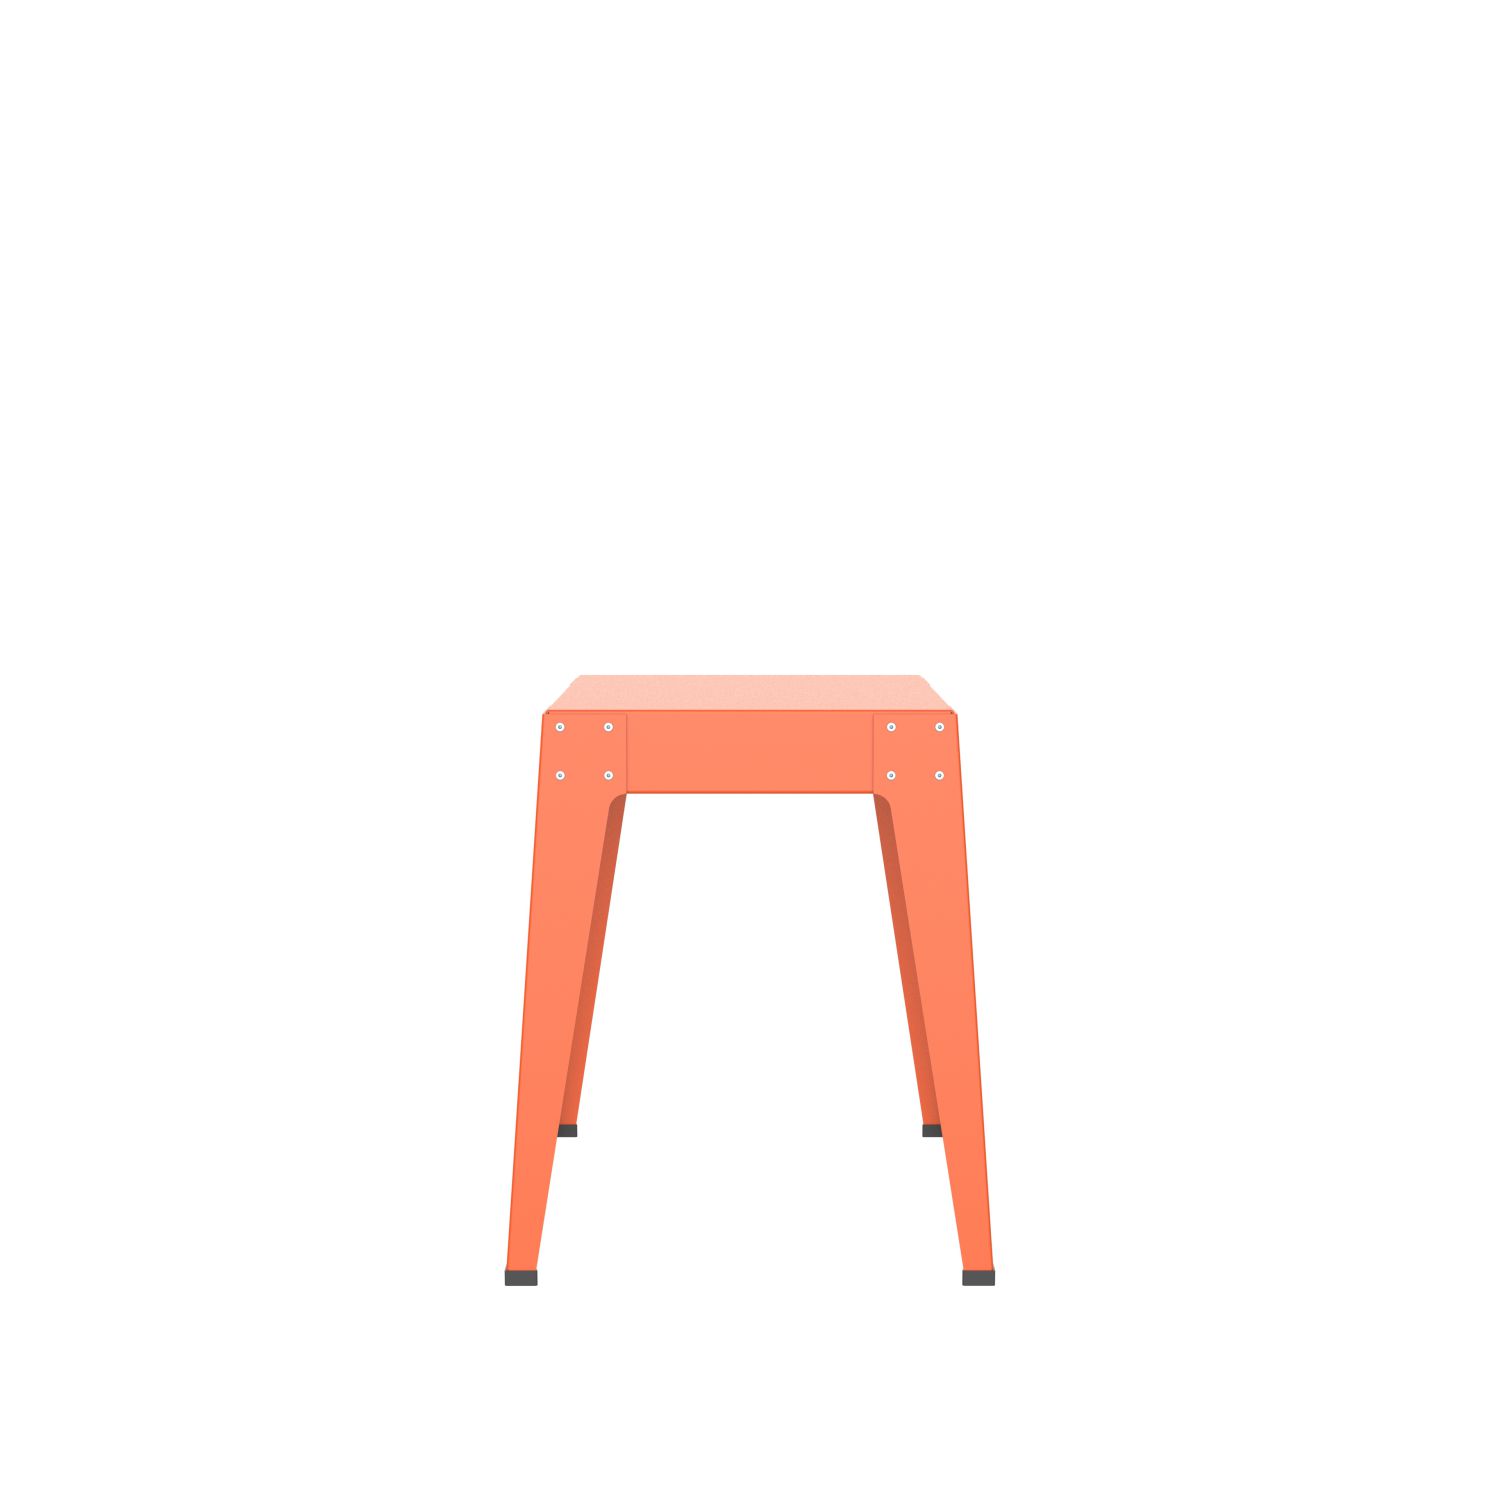 lensvelt piet hein eek aluminium series stool pure orange ral2004 soft leg ends